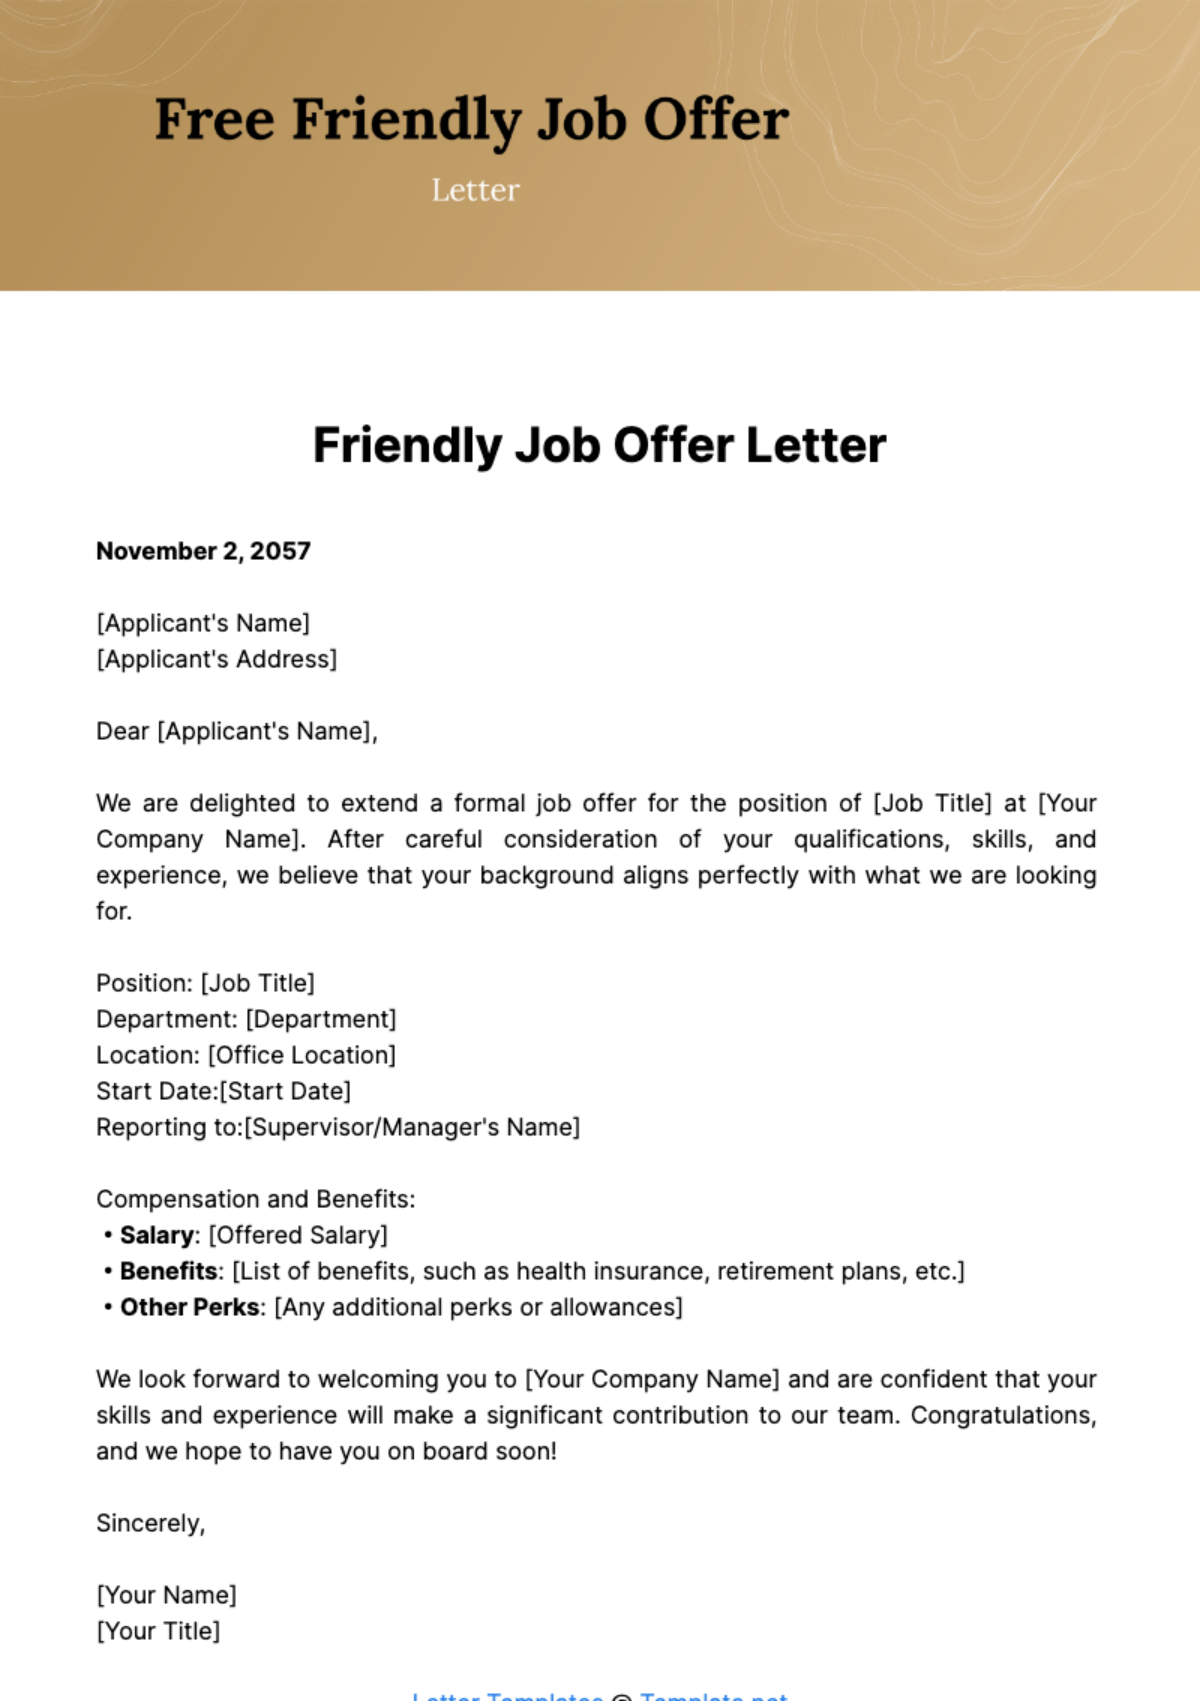 Friendly Job Offer Letter Template